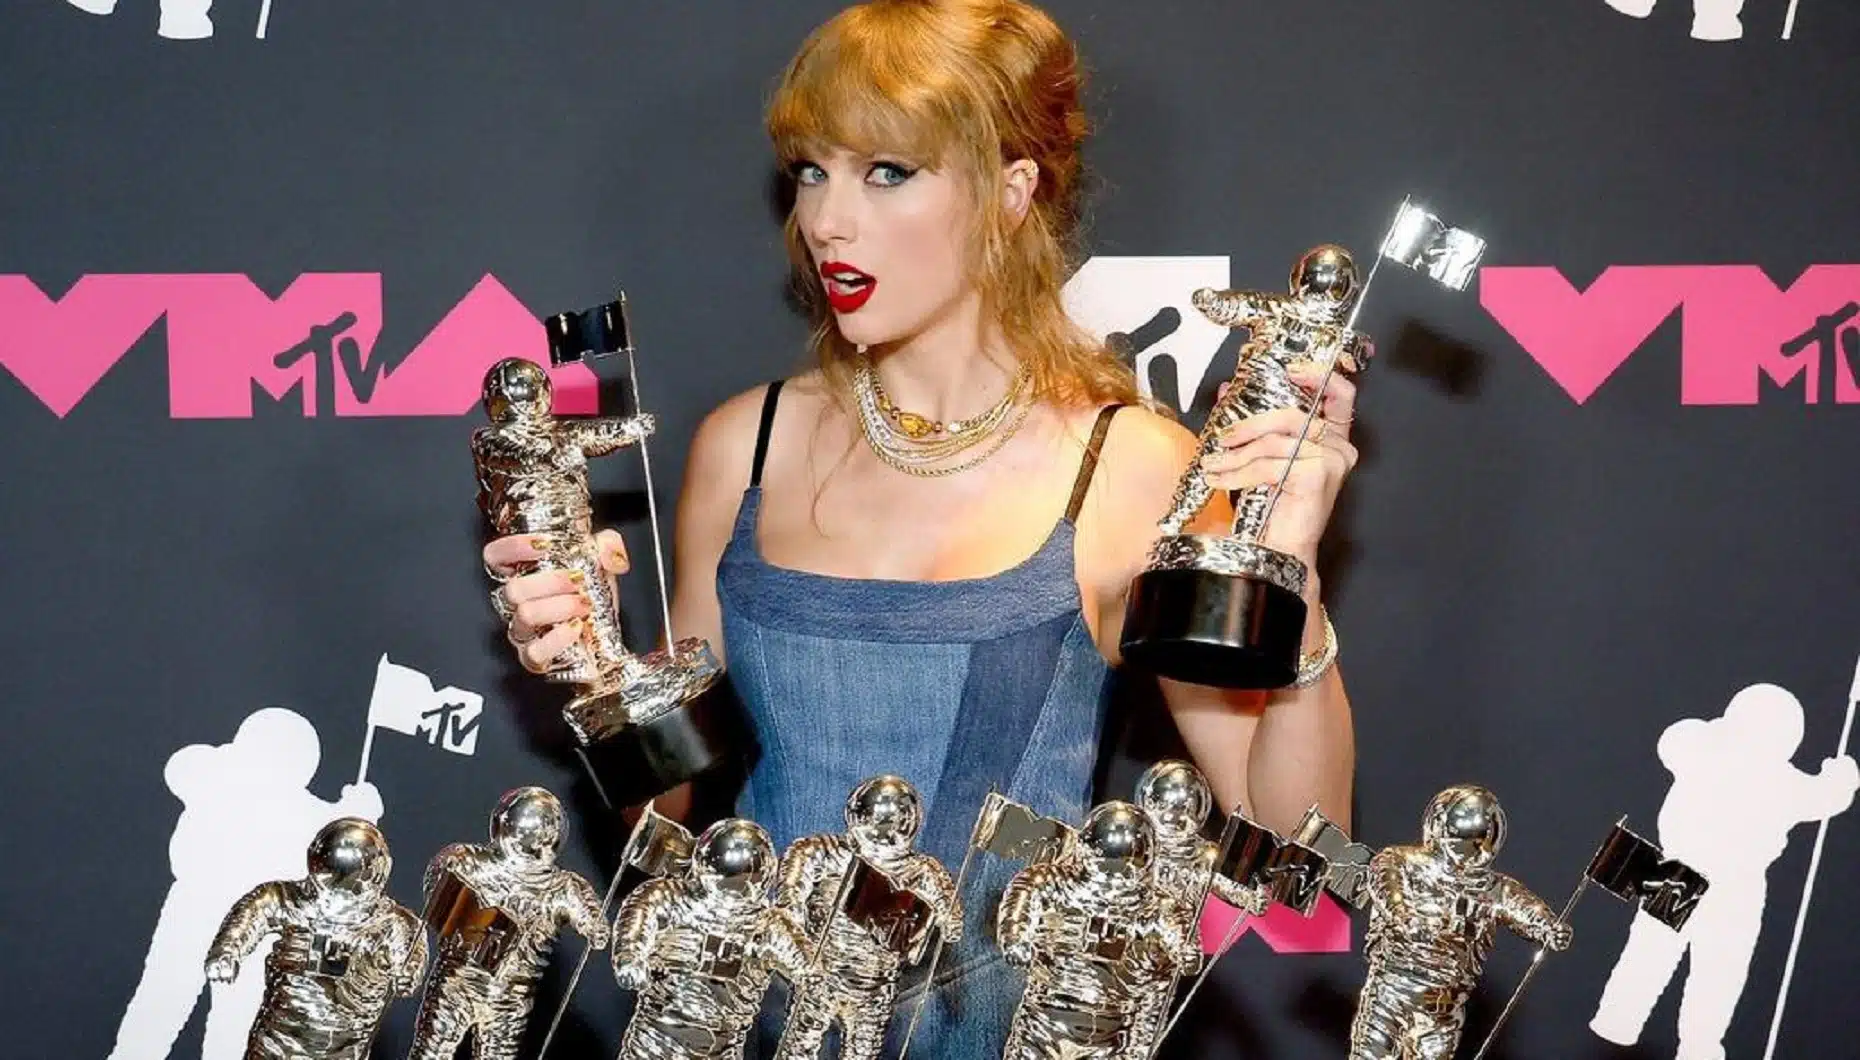 Mtv Video Music Awards- Taylor Swift